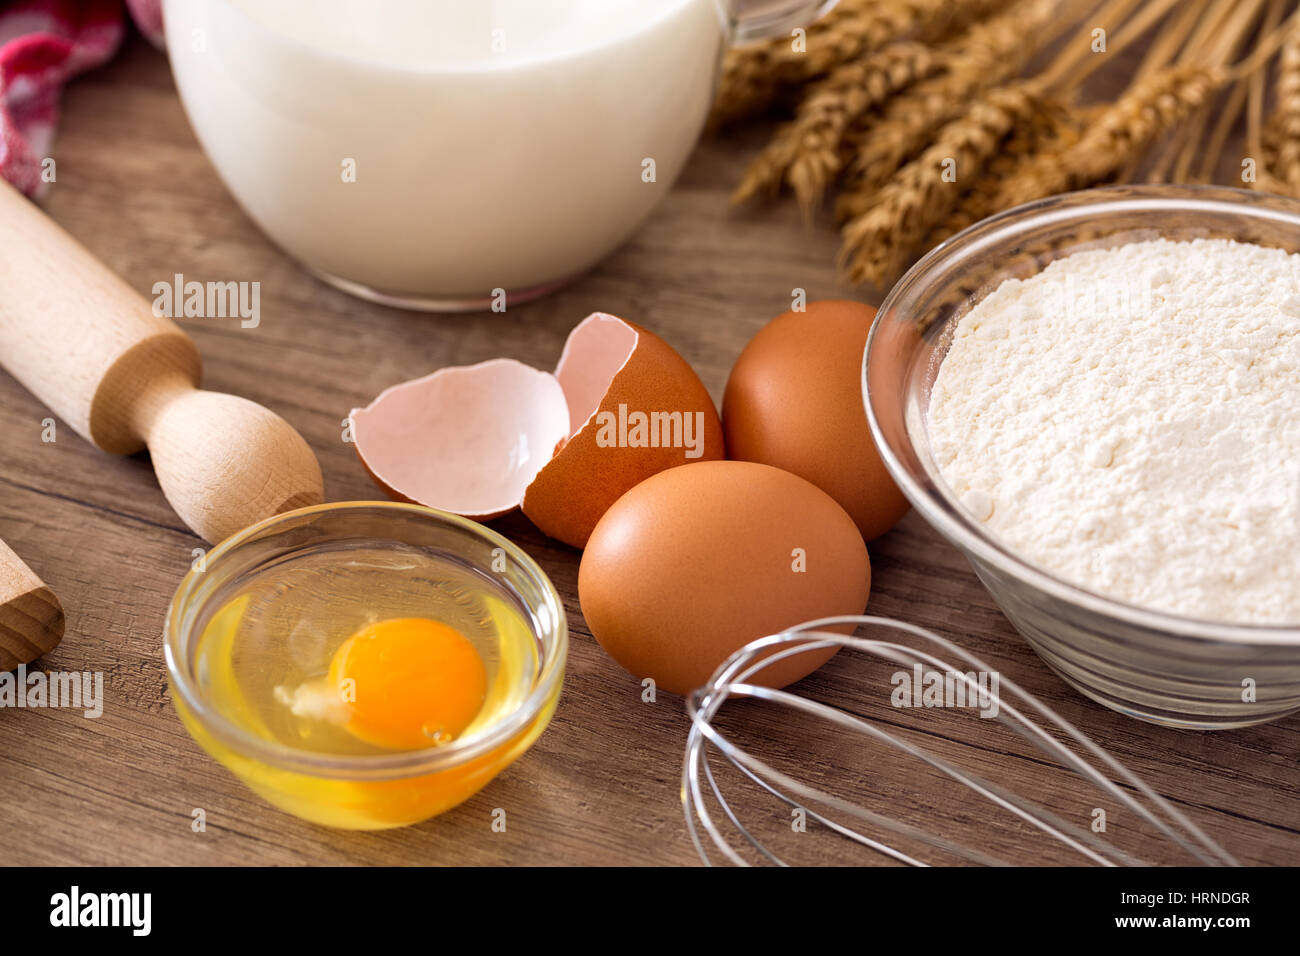 https://c8.alamy.com/comp/HRNDGR/egg-flour-and-baking-supplies-on-the-table-HRNDGR.jpg